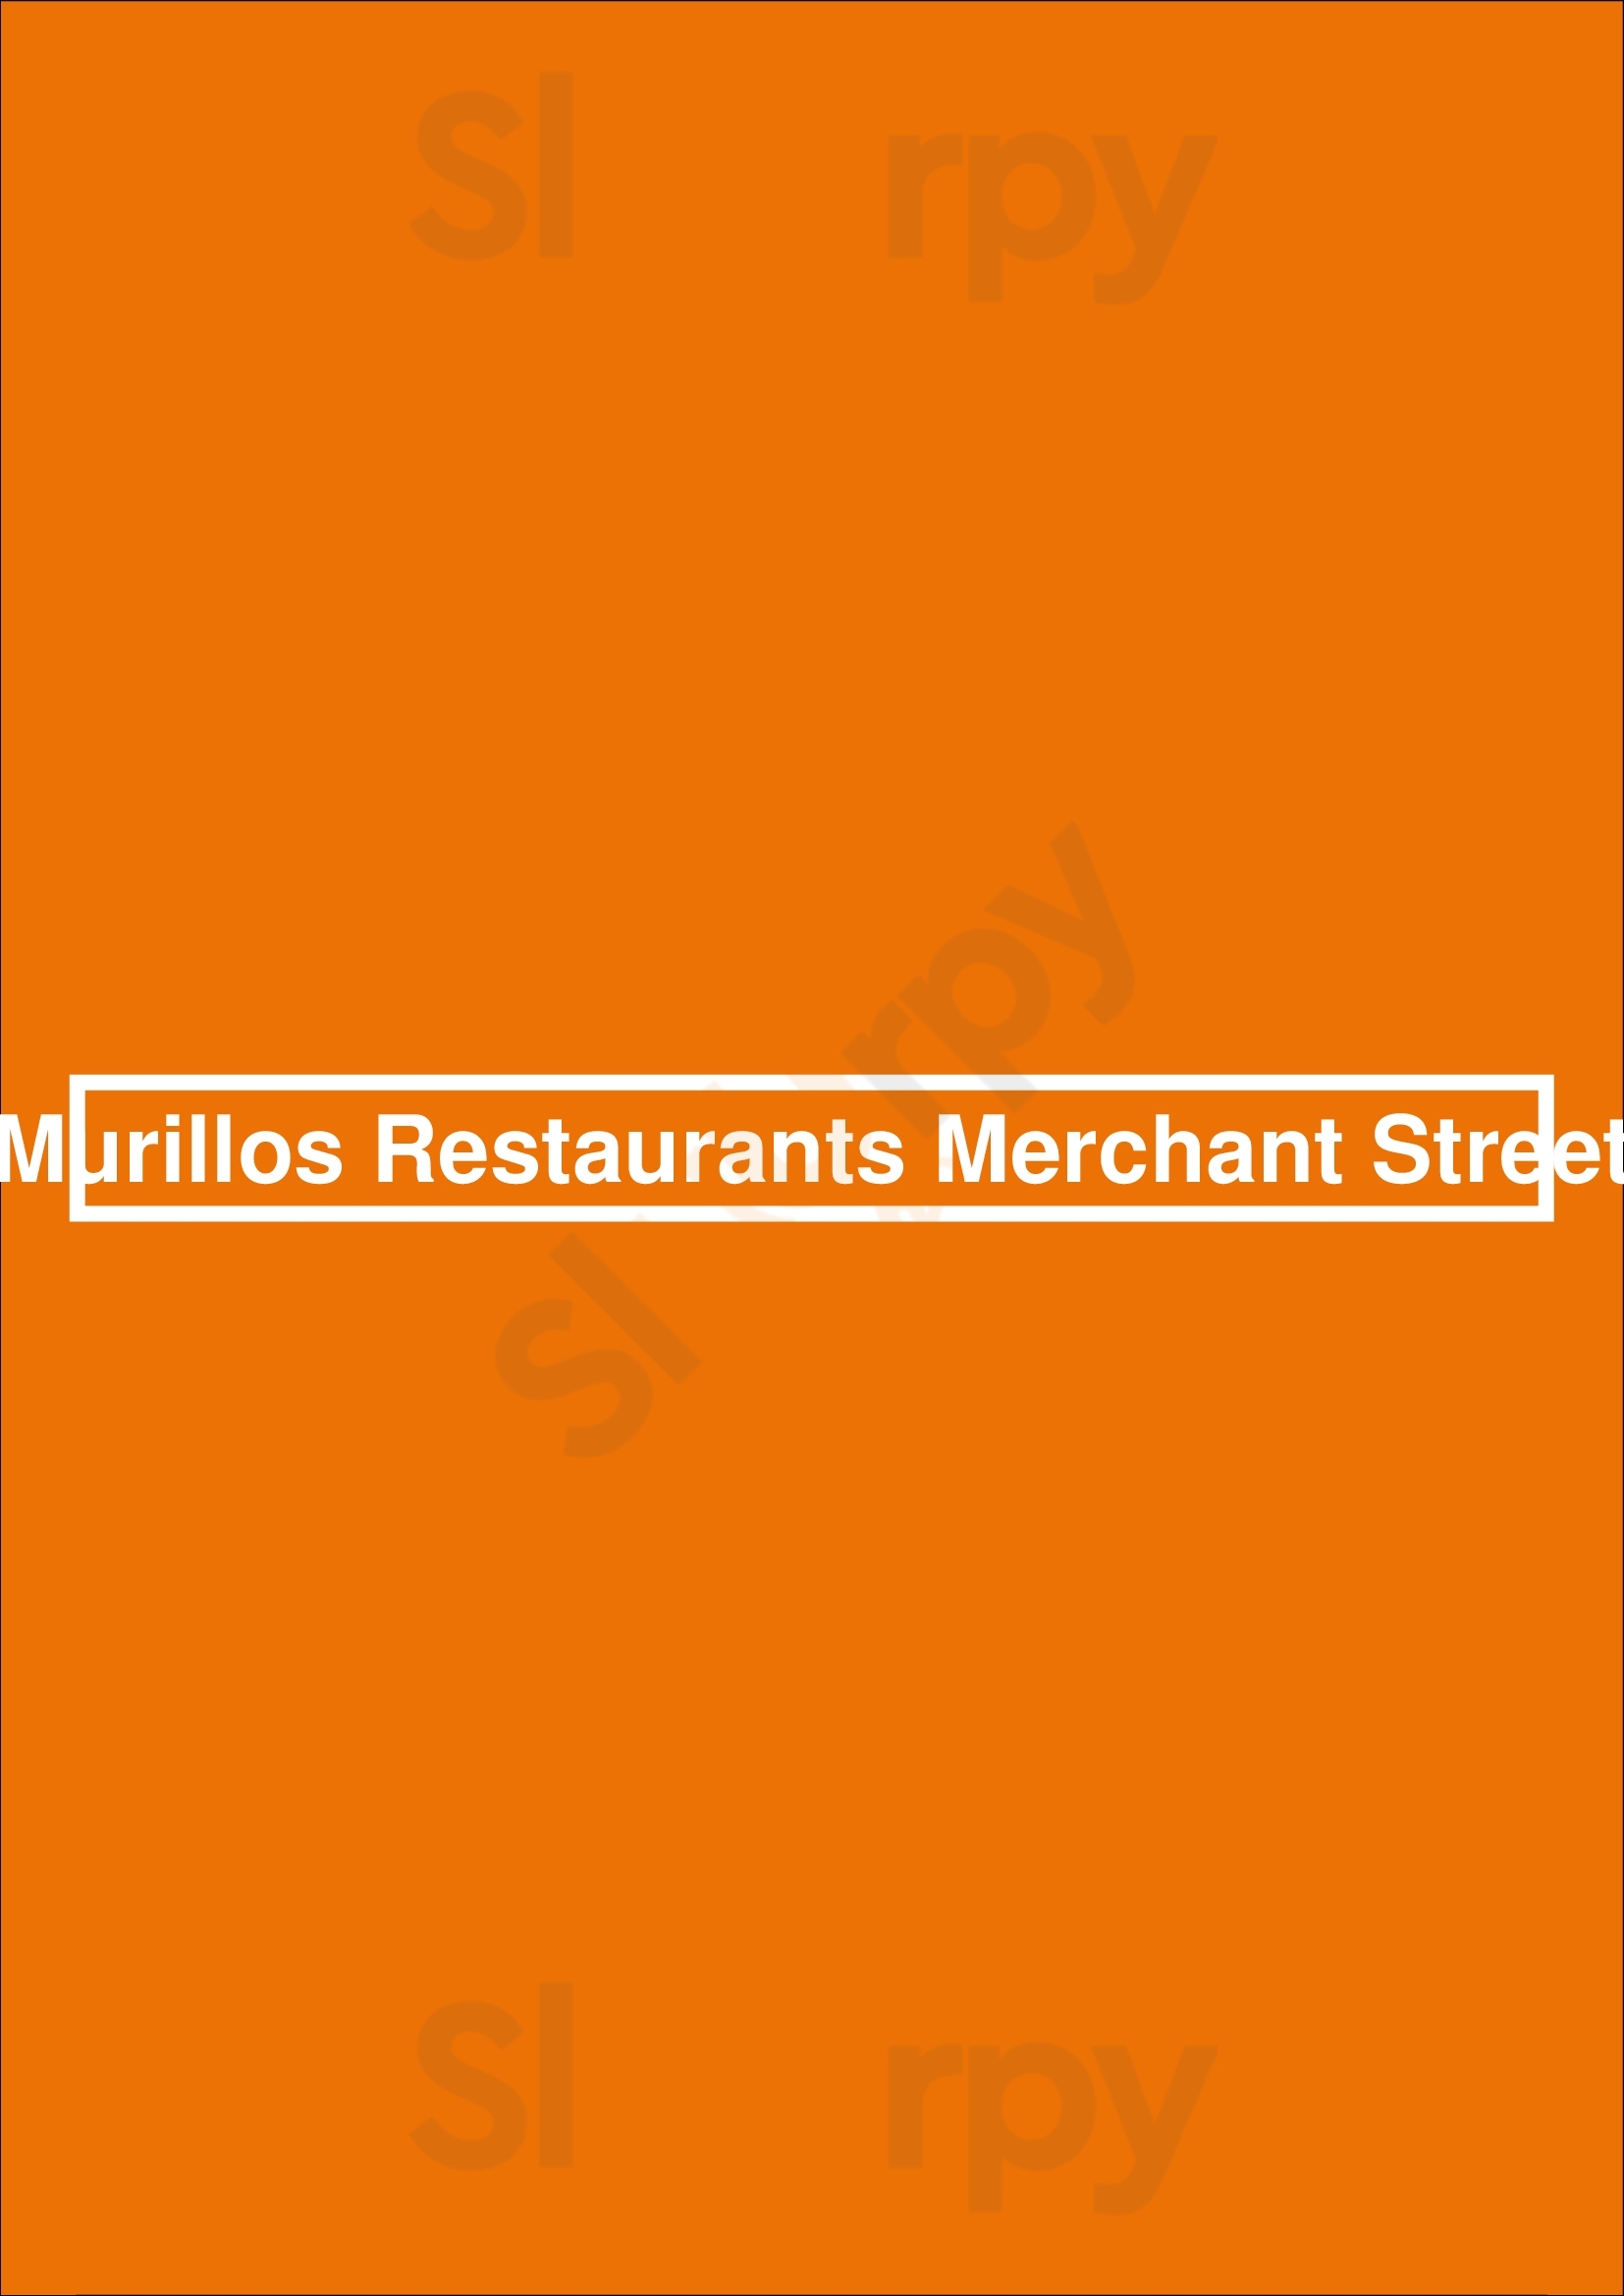 Murillos Restaurants Merchant Street Vacaville Menu - 1